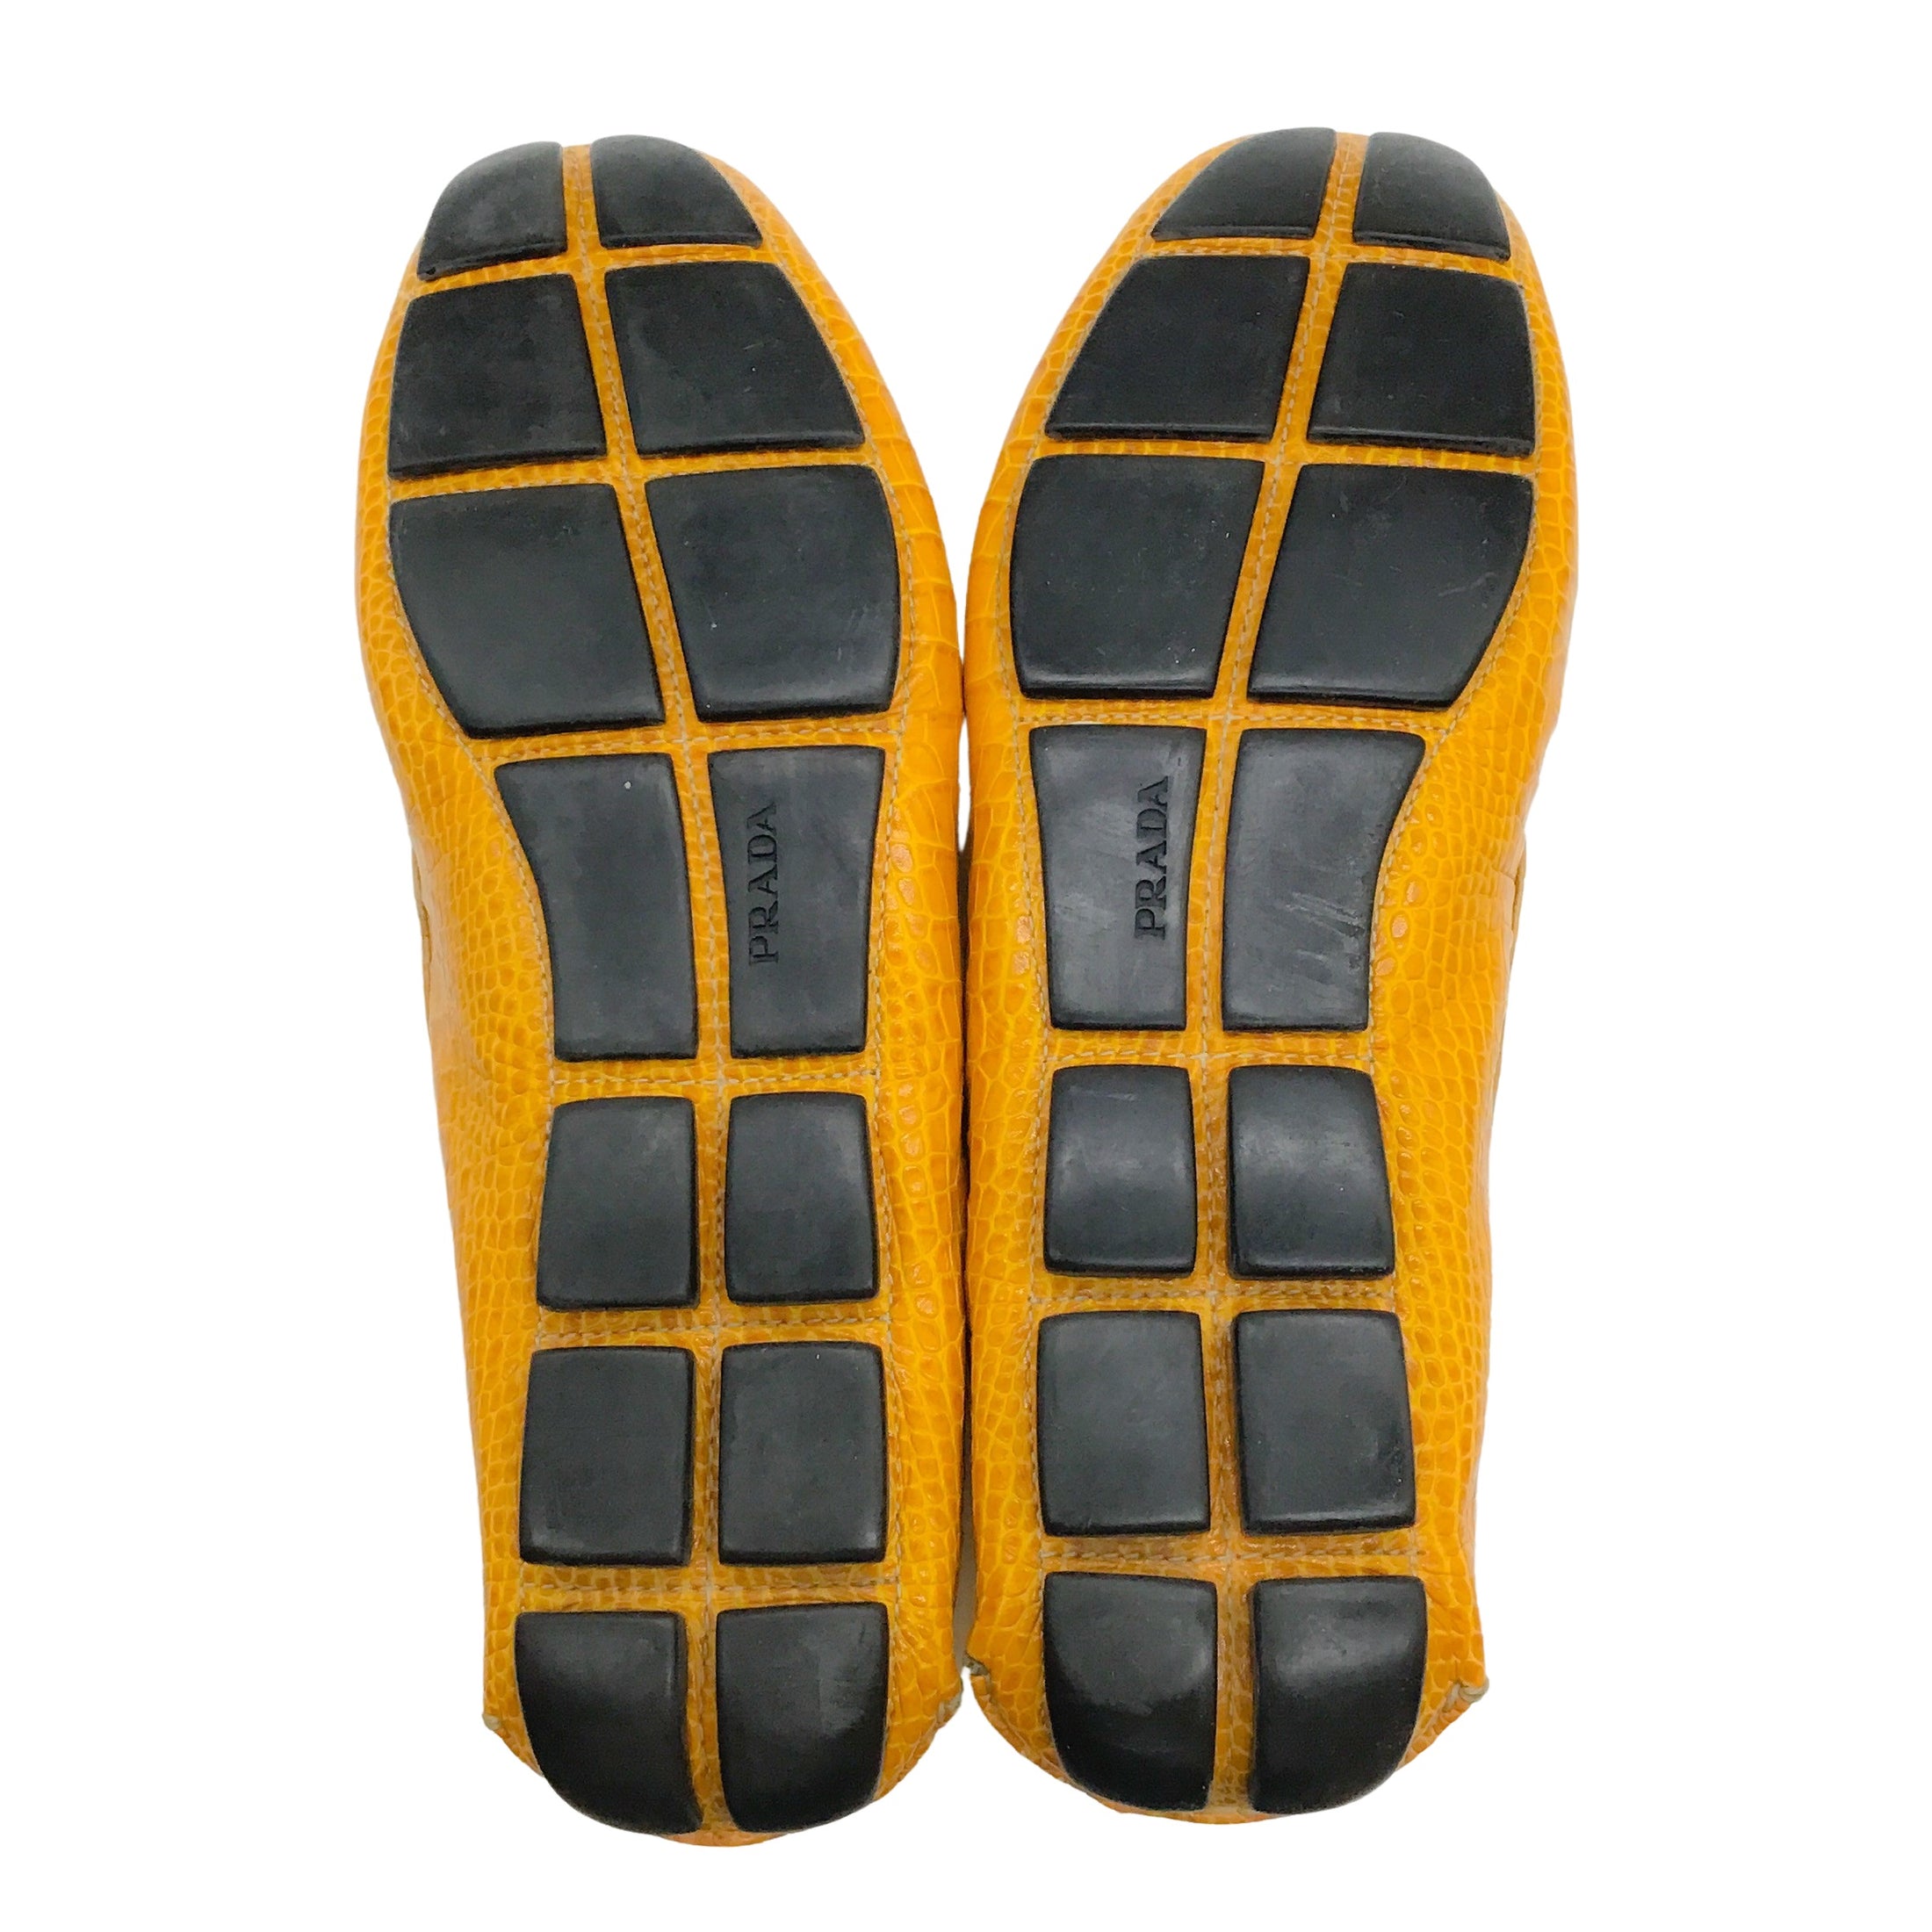 Prada Men's Mustard Crocodile Leather Driving Loafers